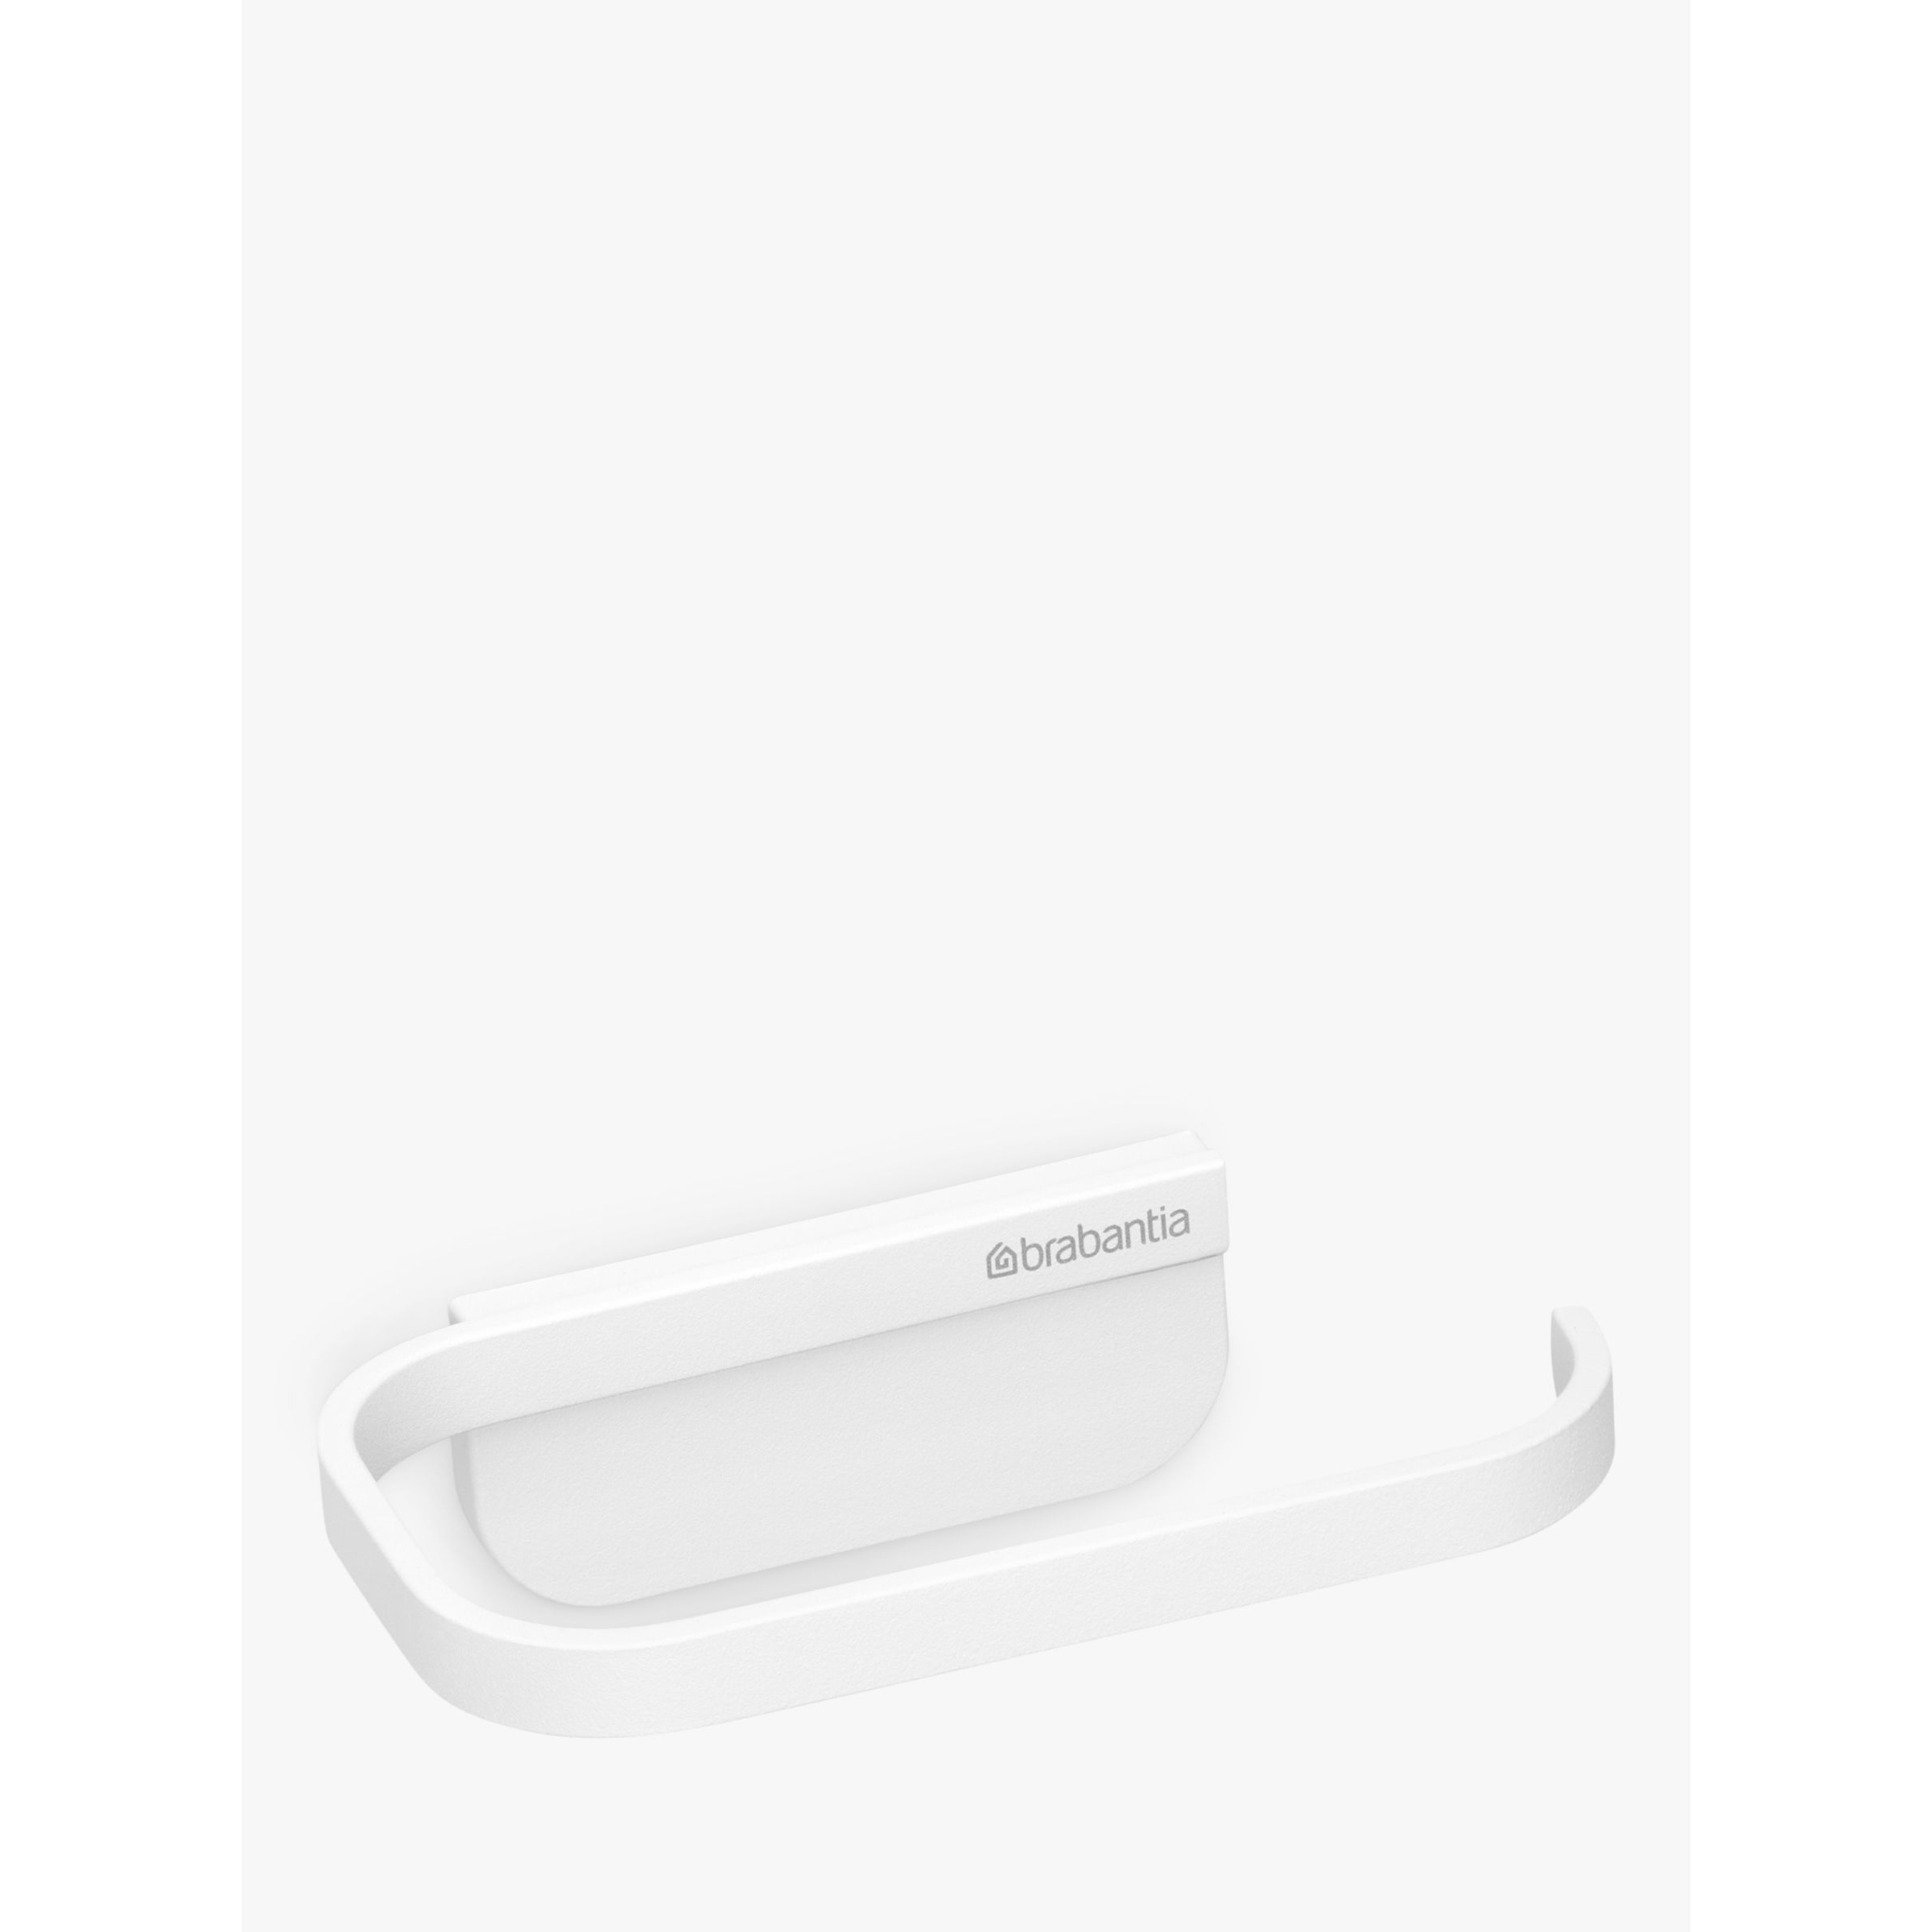 Brabantia MindSet Toilet Roll Holder - image 1